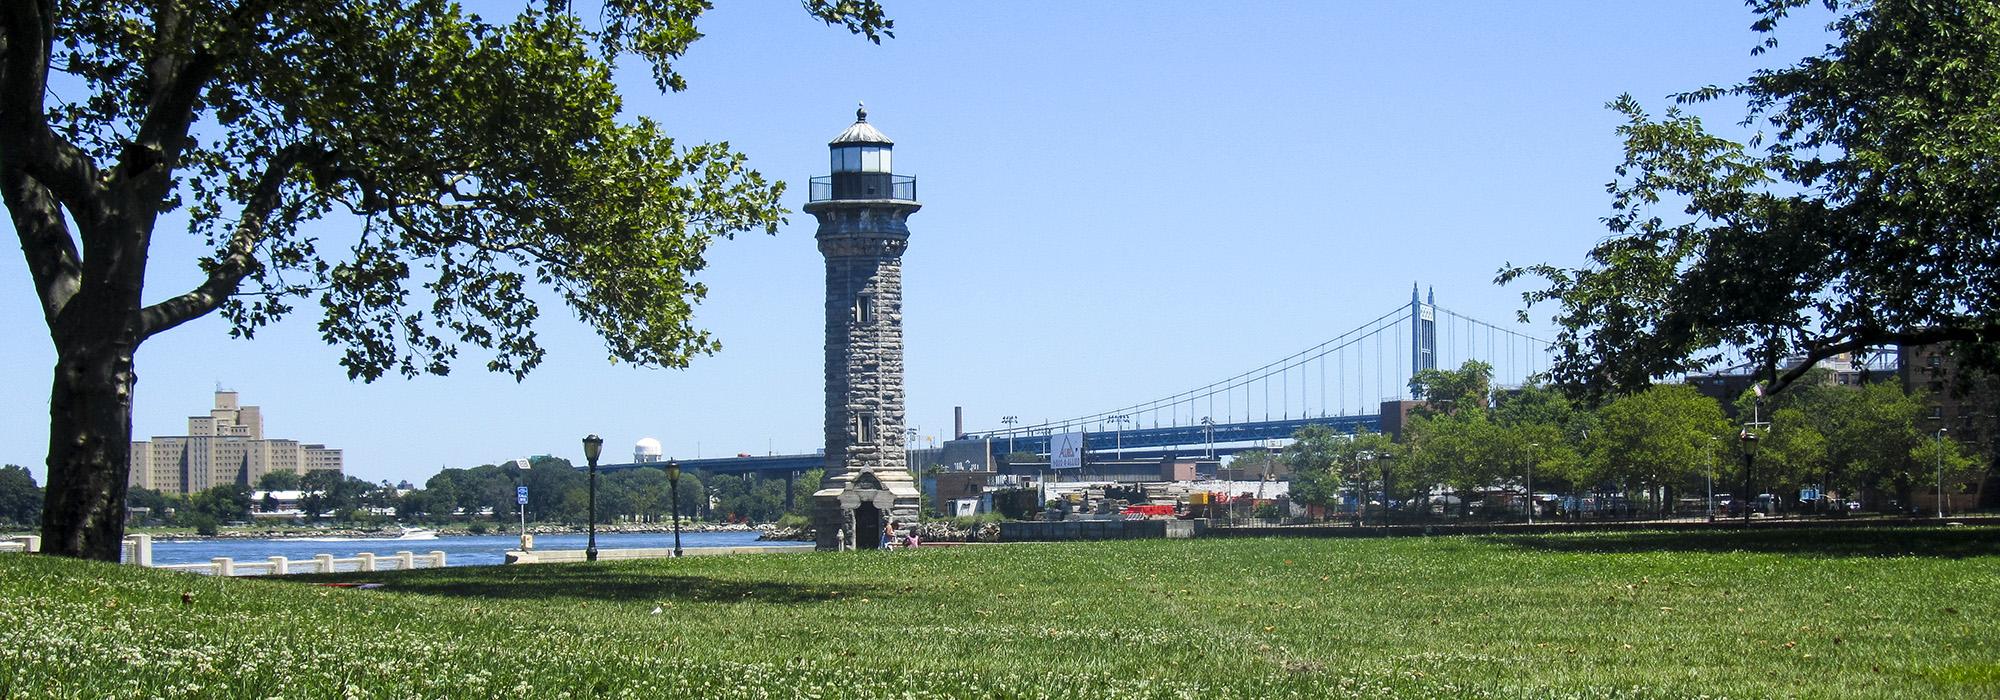 Lighthouse Park, Roosevelt Island, NY